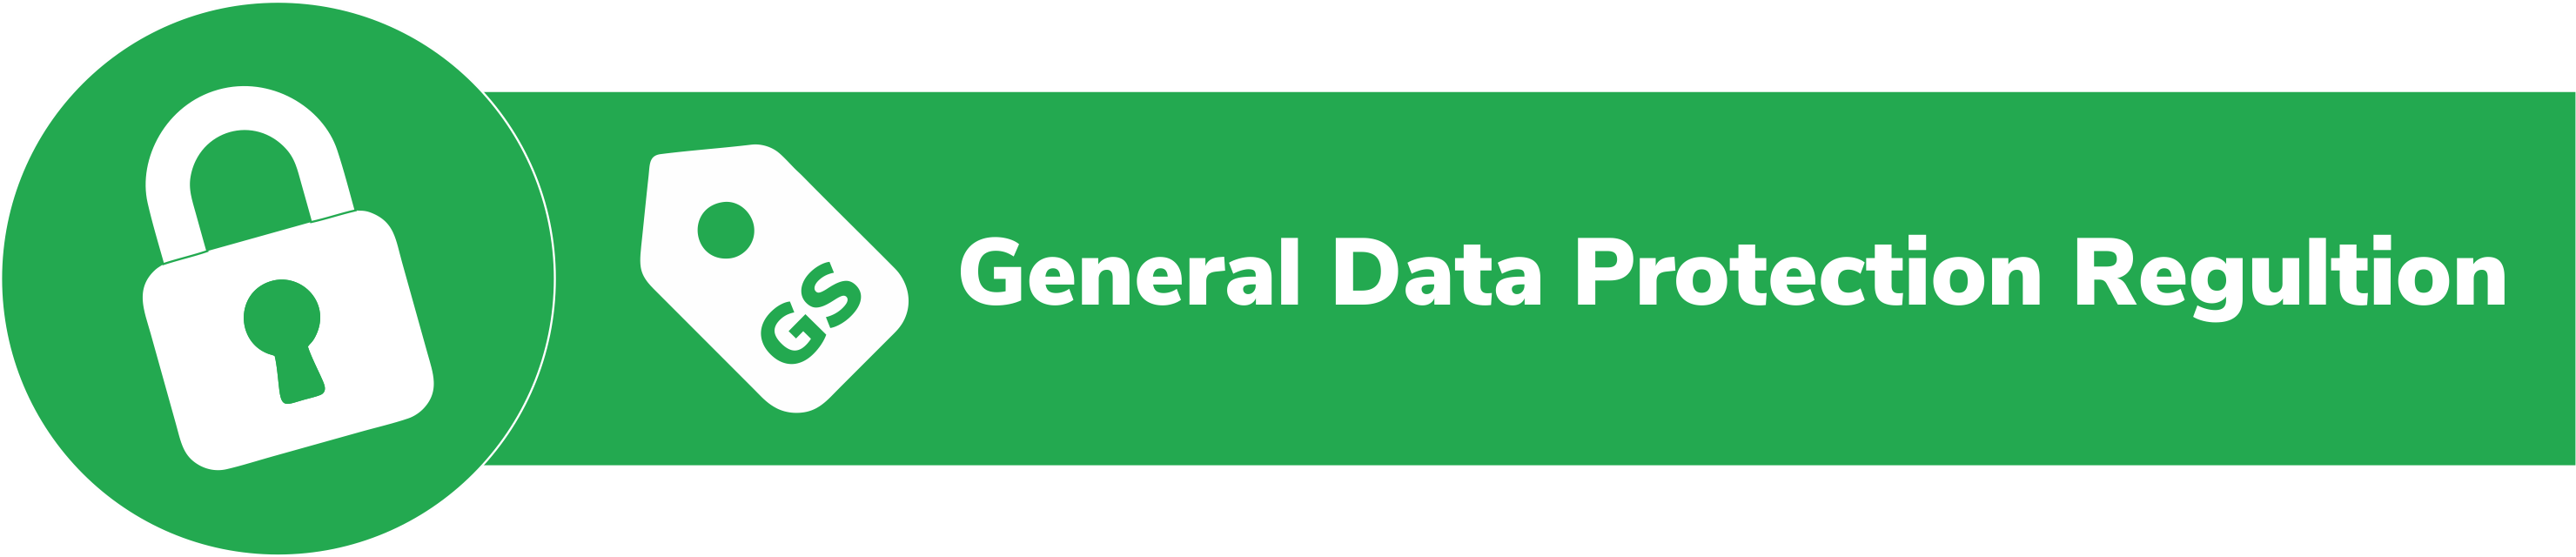 General Data Protection Regulation training 